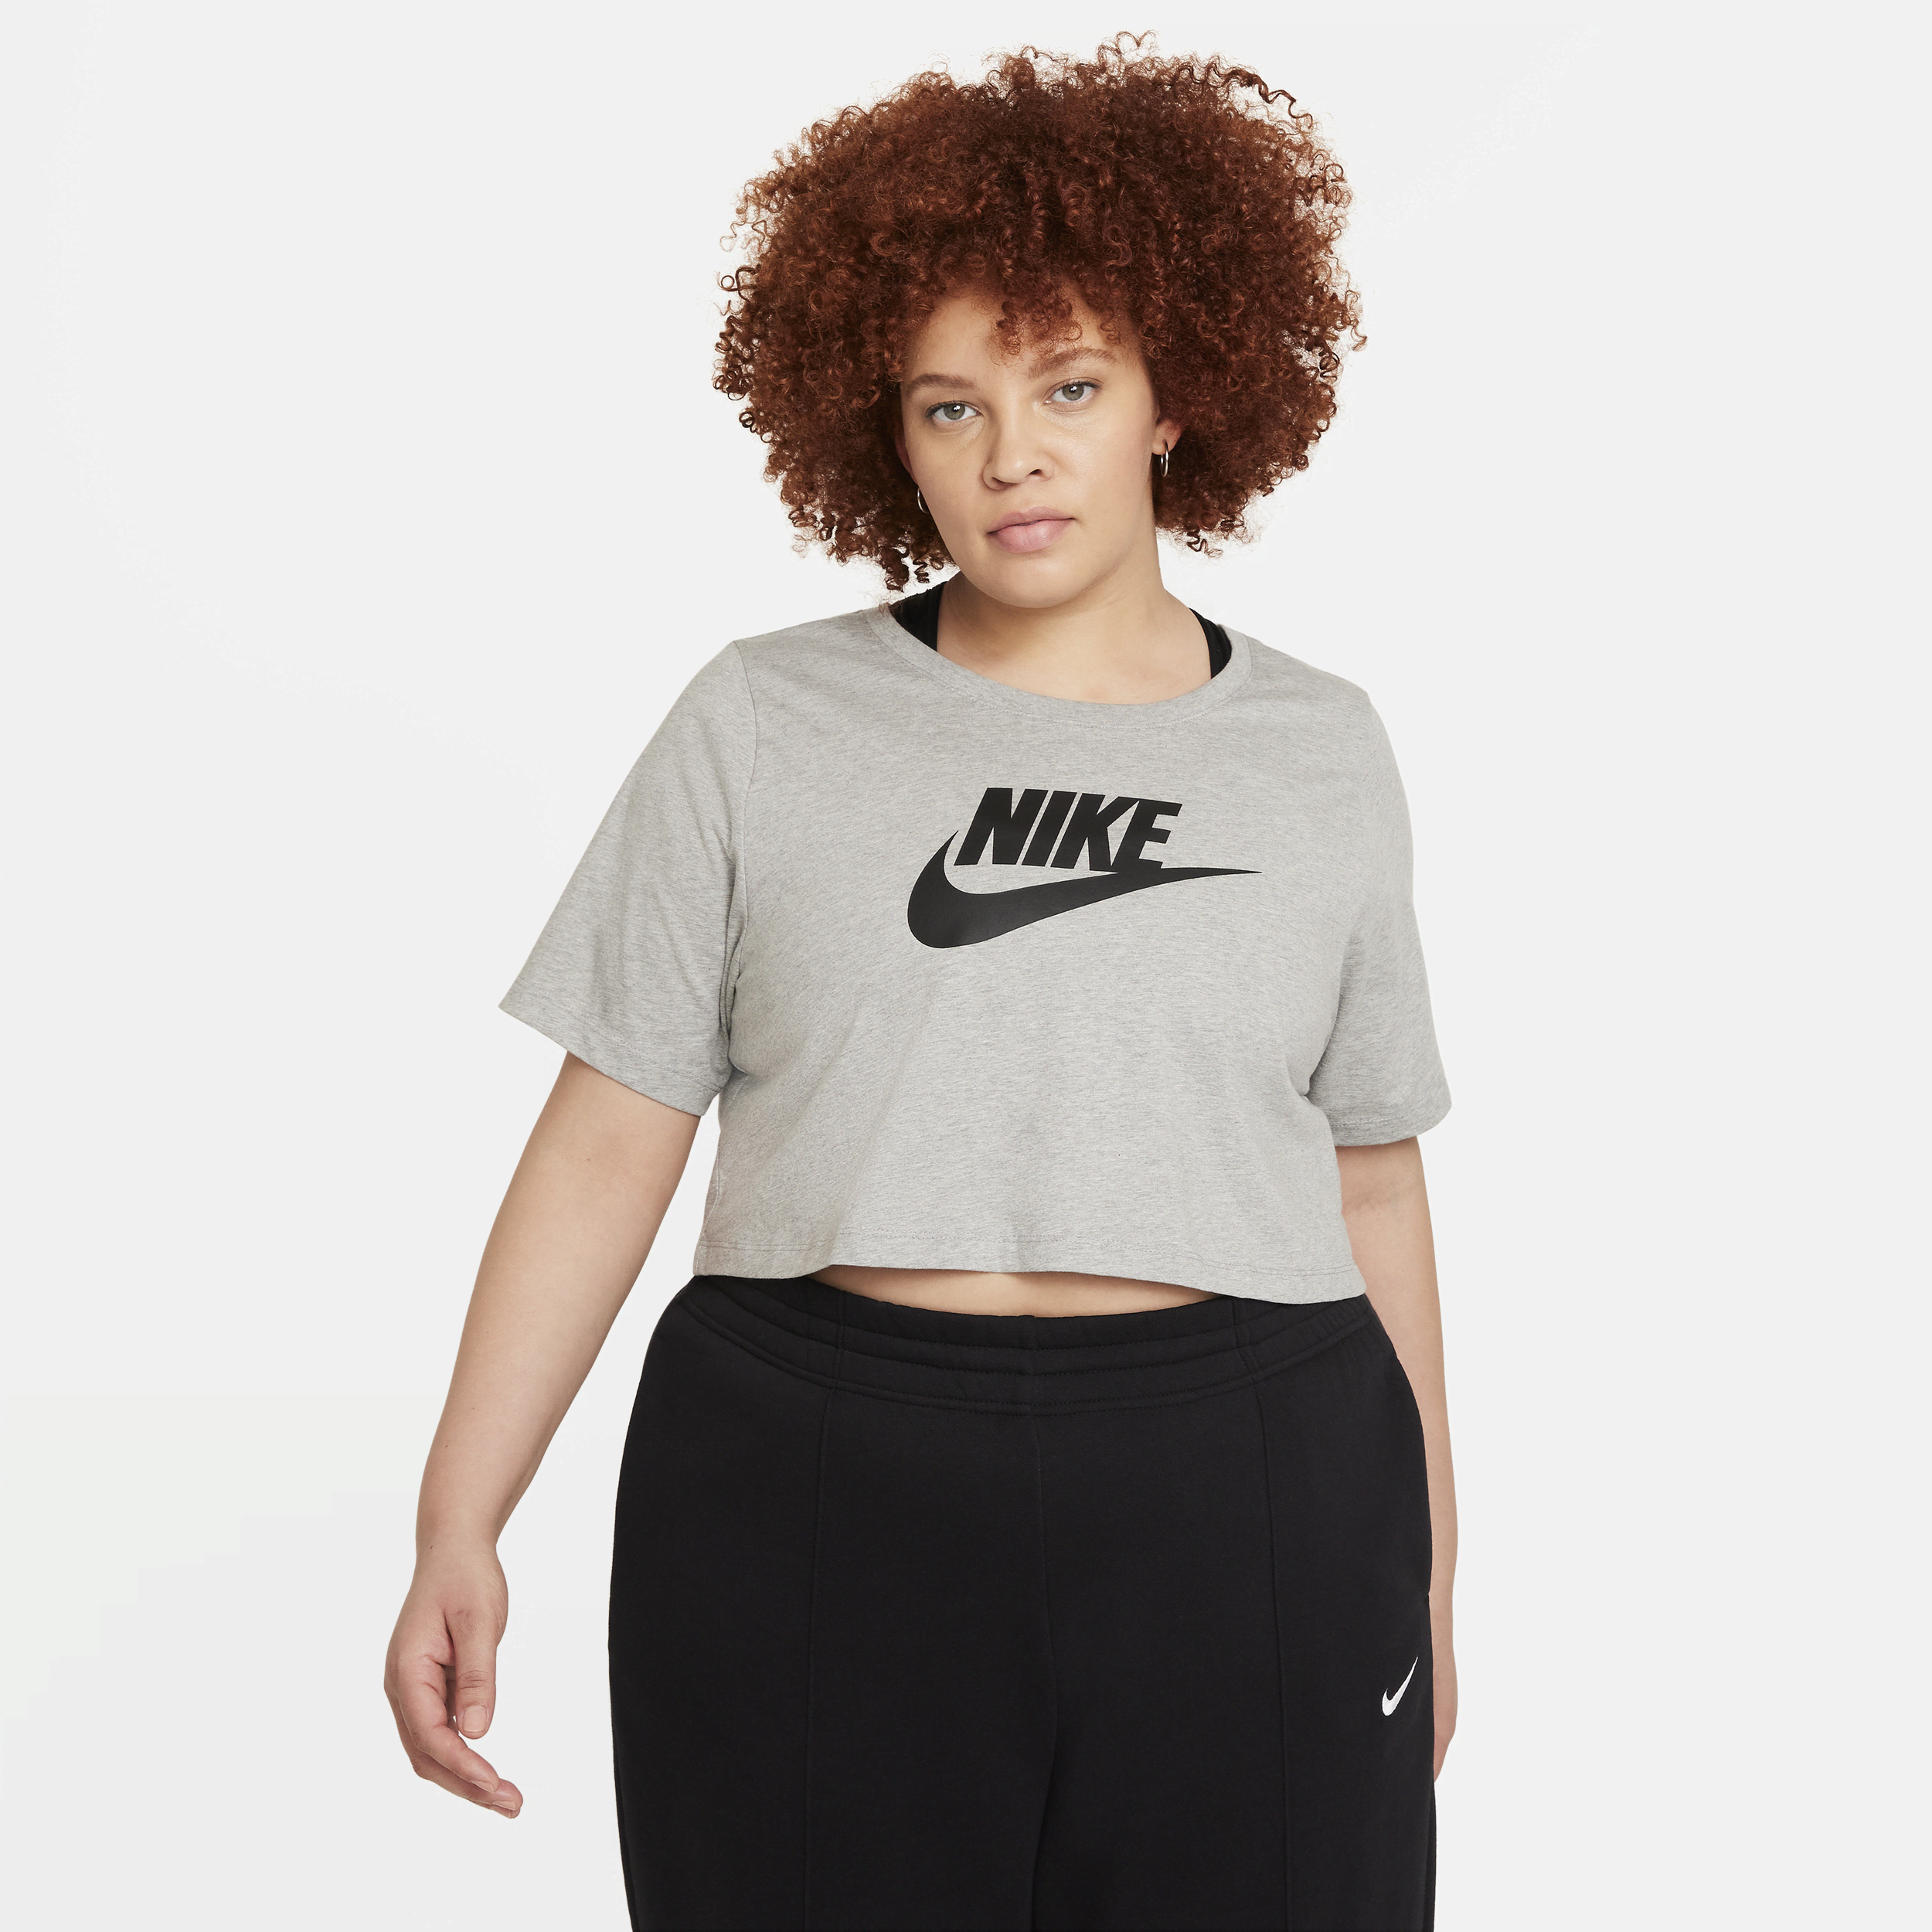 Nike Sportswear-T-shirt til kvinder (plus size) - grå